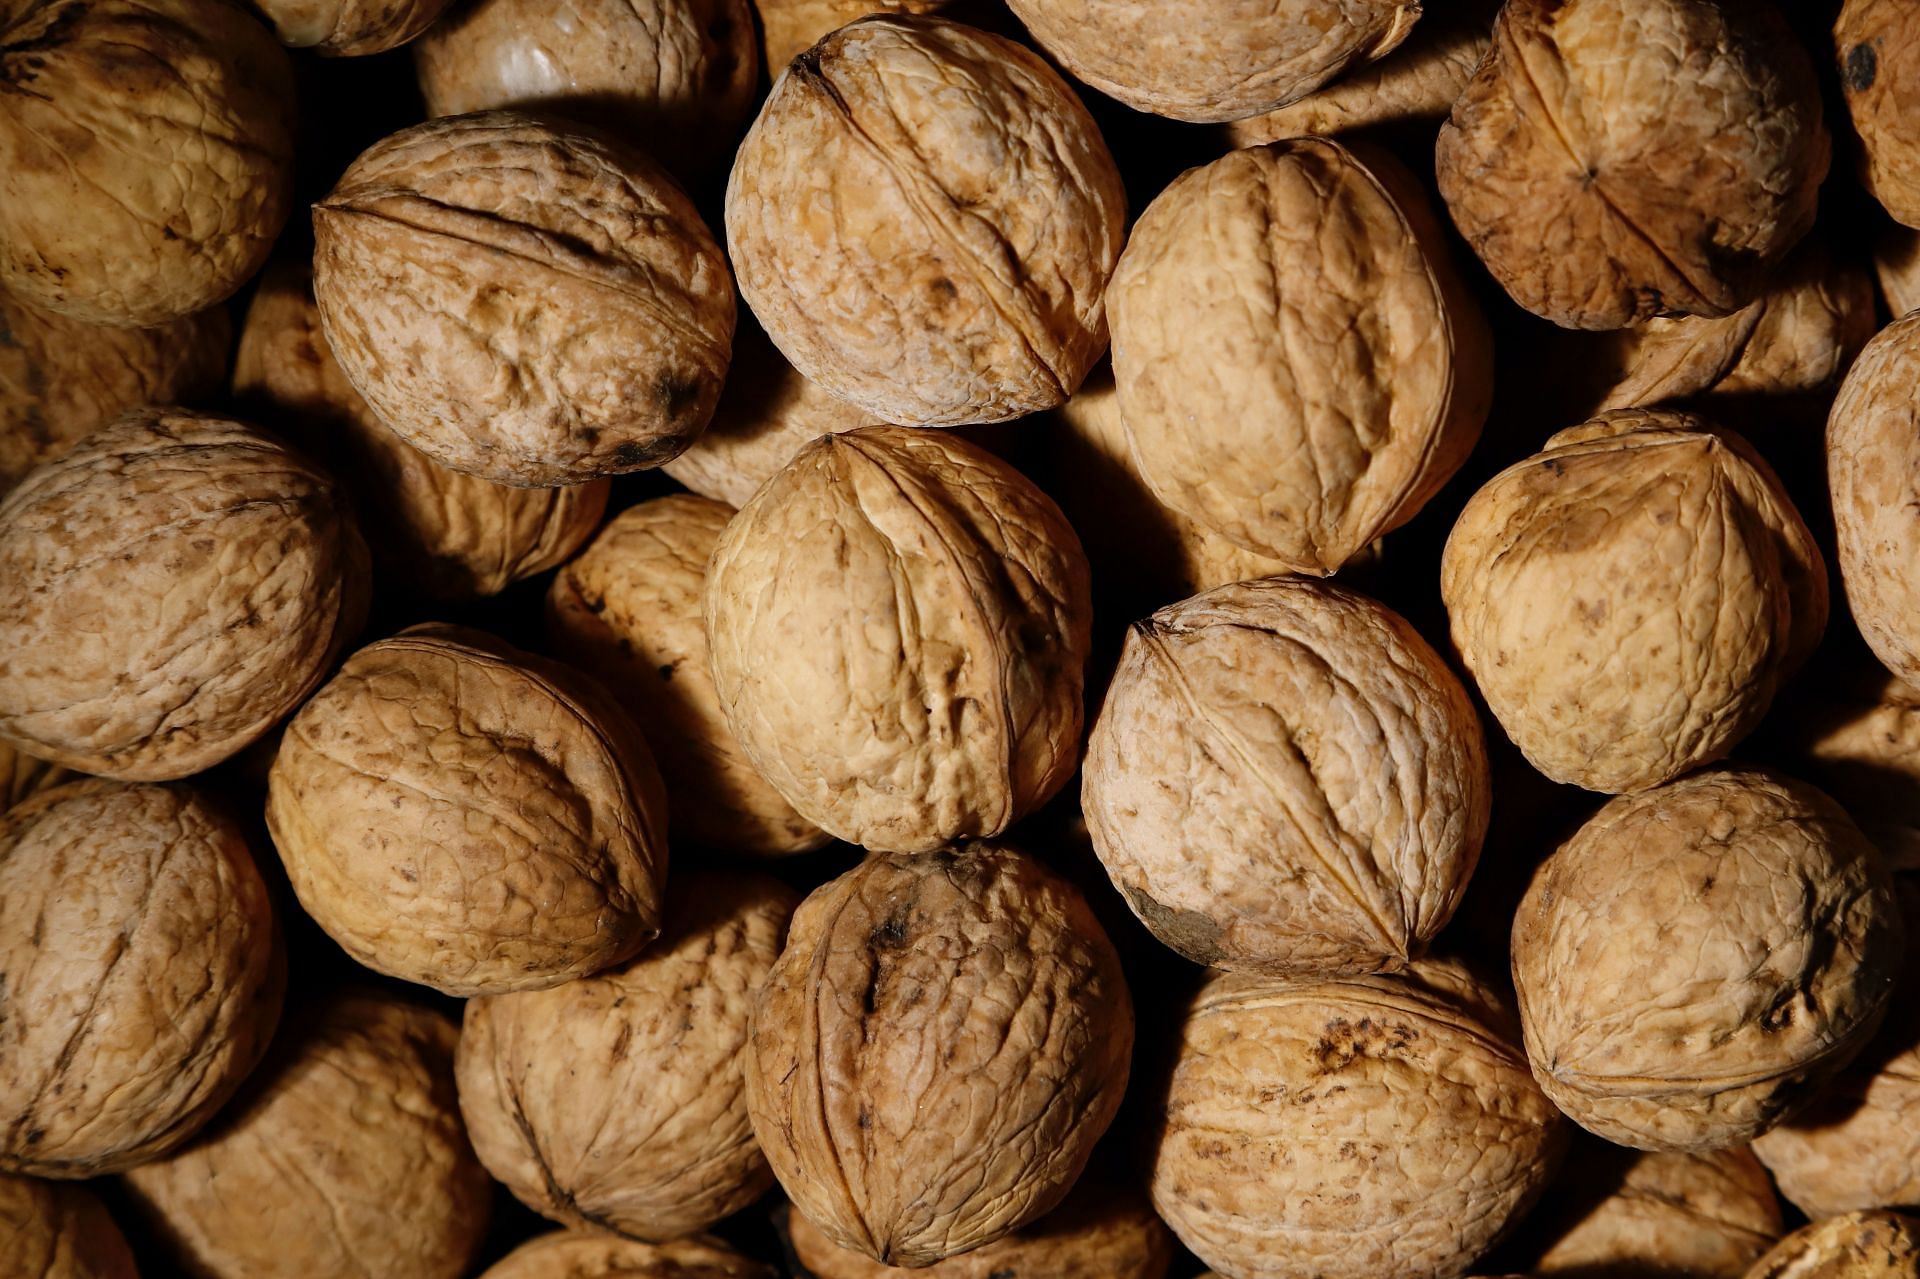 Walnuts are a good source of omega-3 fatty acids. (Image via Pexels)